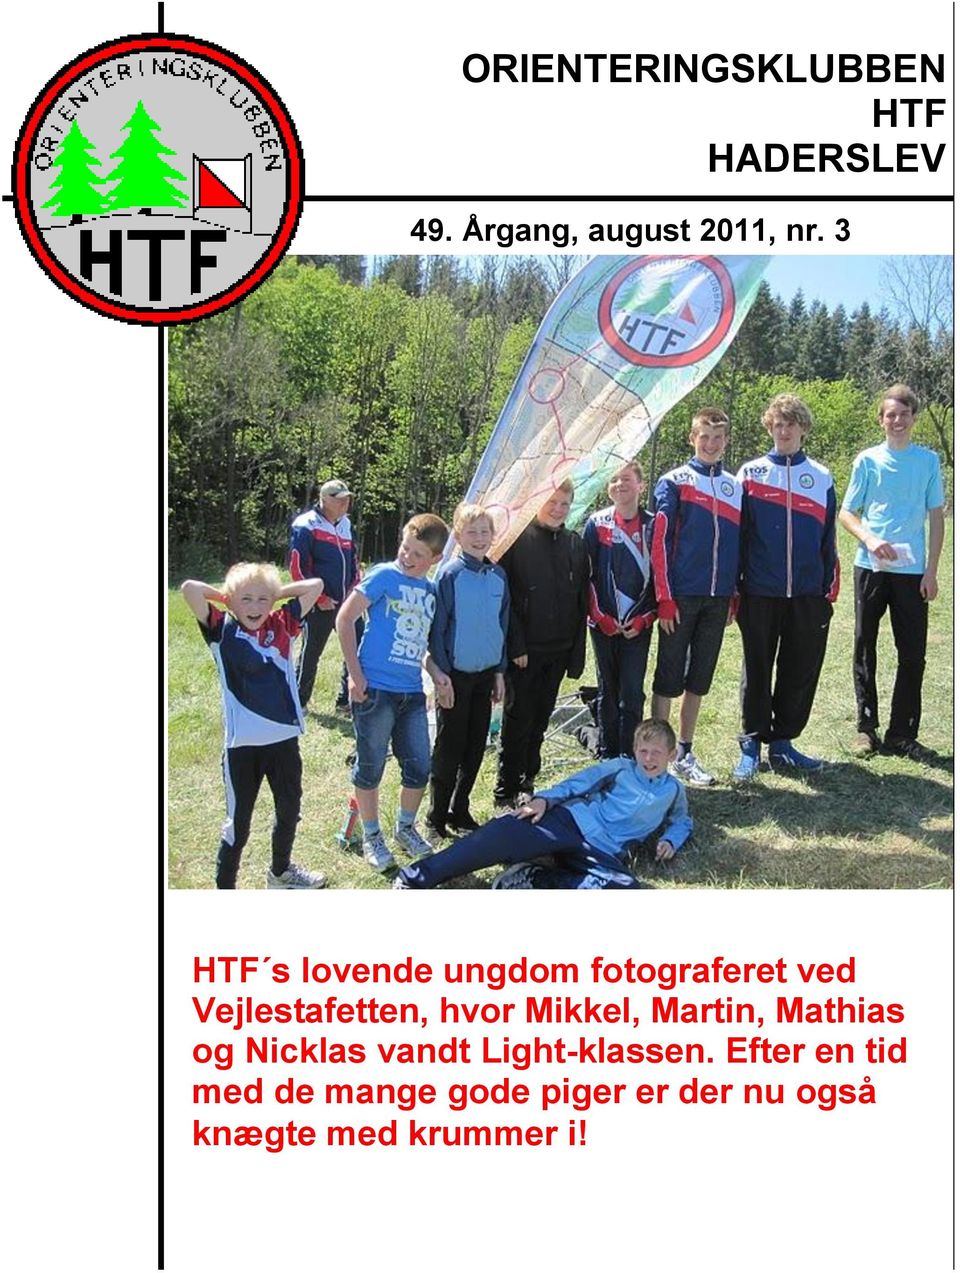 Mikkel, Martin, Mathias og Nicklas vandt Light-klassen.